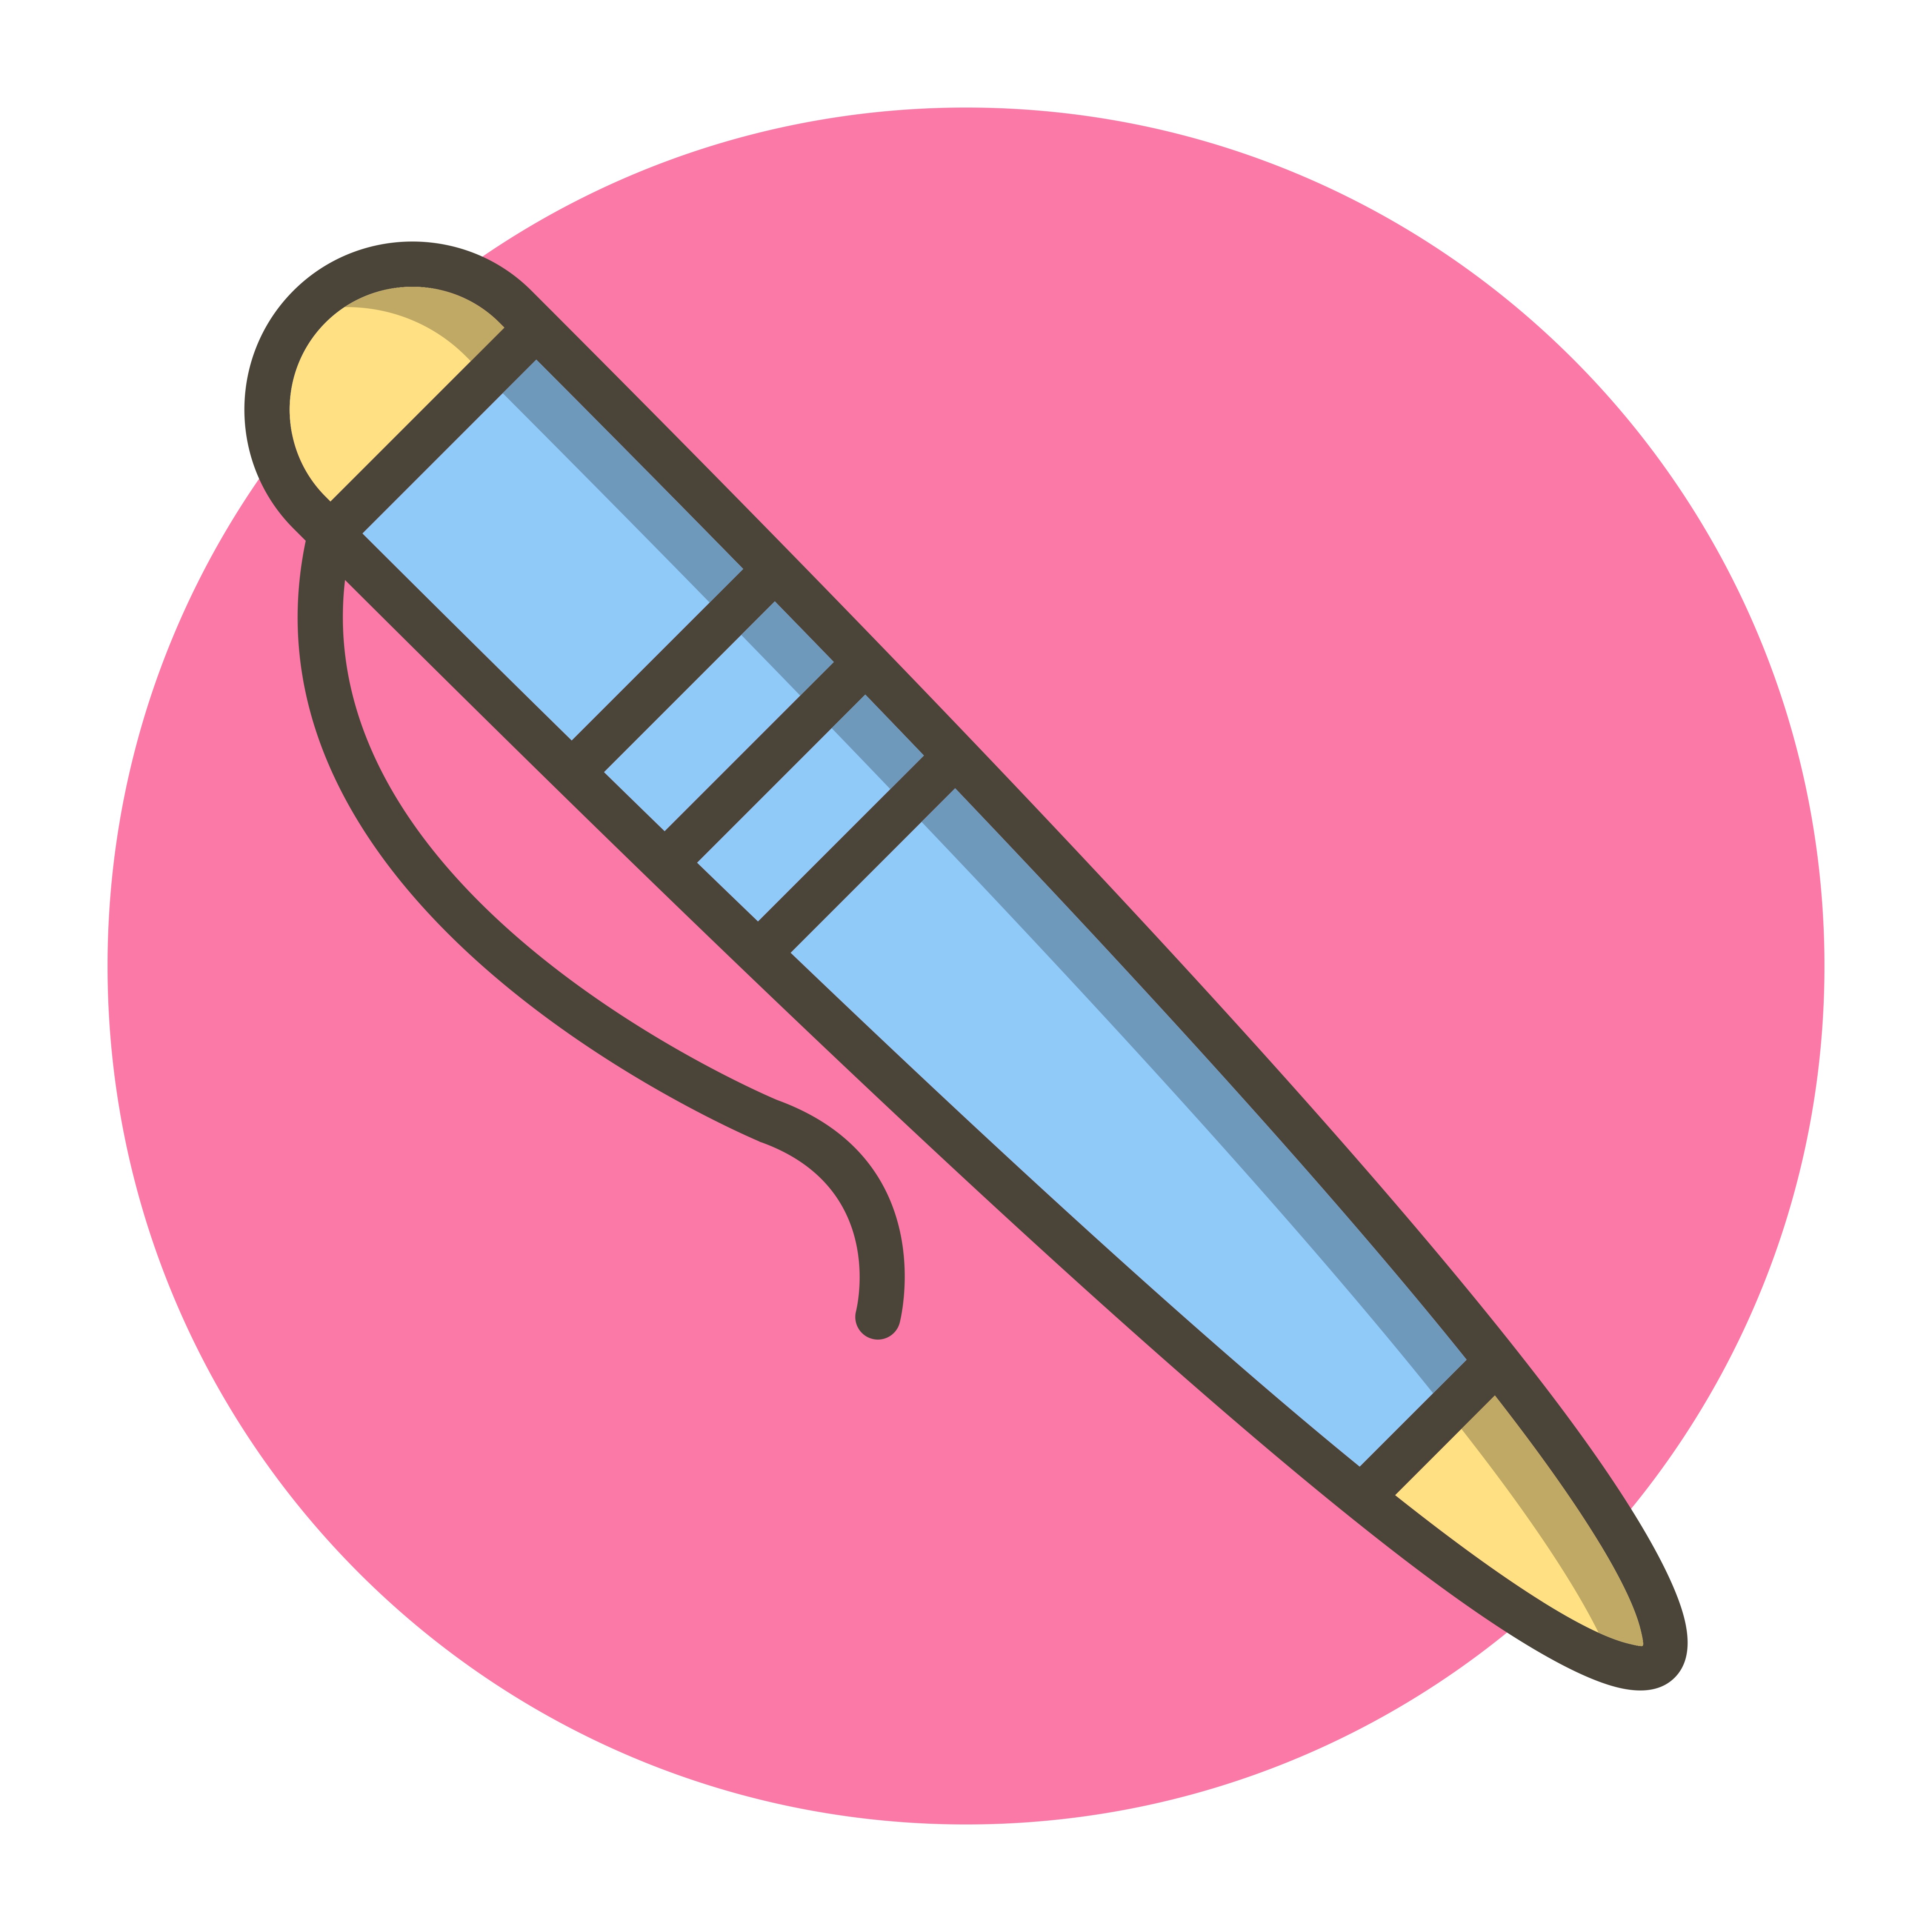 Download Pen Icon Design - Download Free Vectors, Clipart Graphics & Vector Art